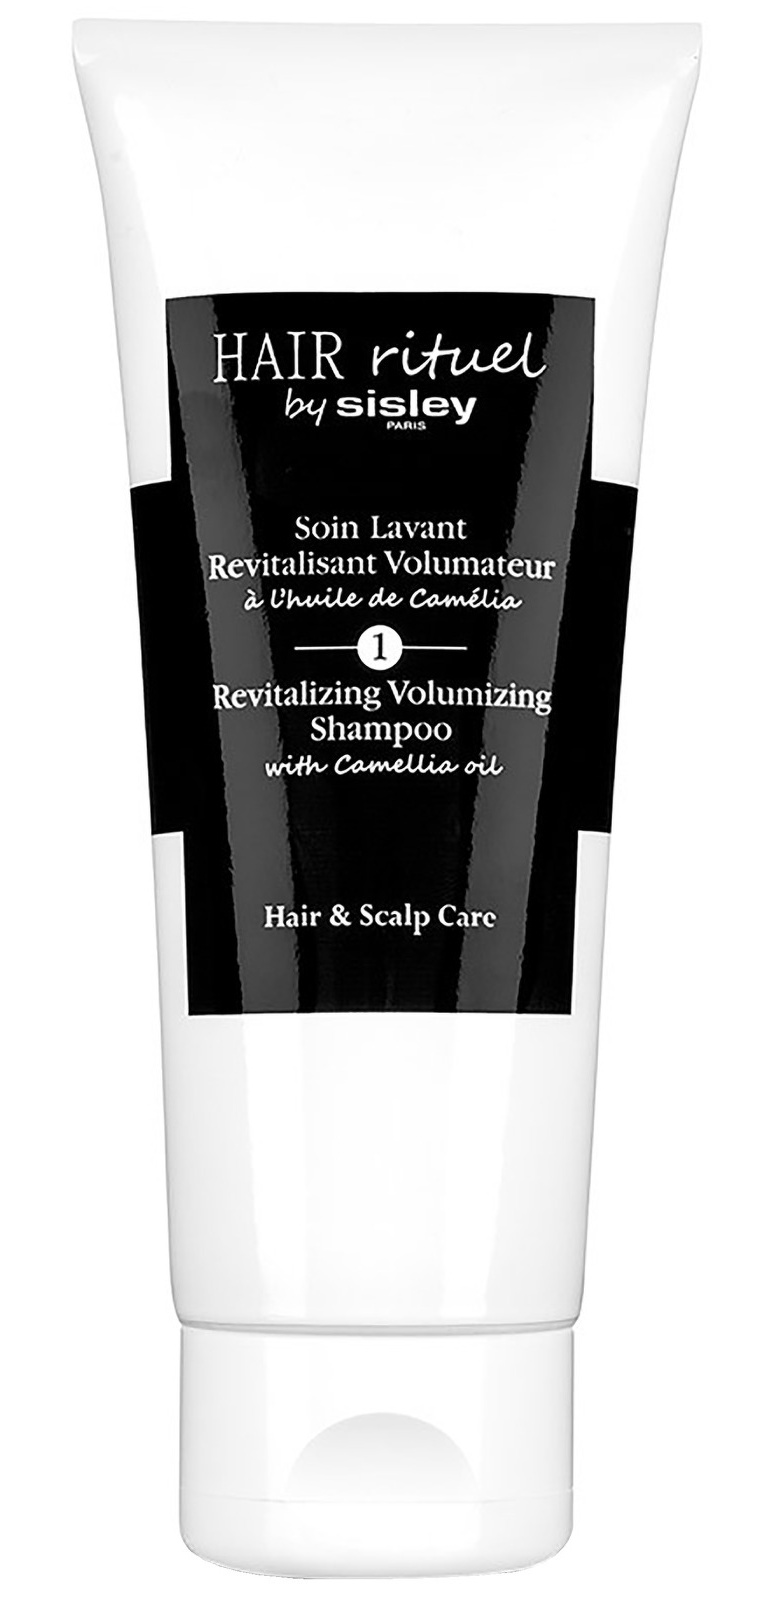 Sisley Hair Rituel Revitalizing Volumizing Shampoo